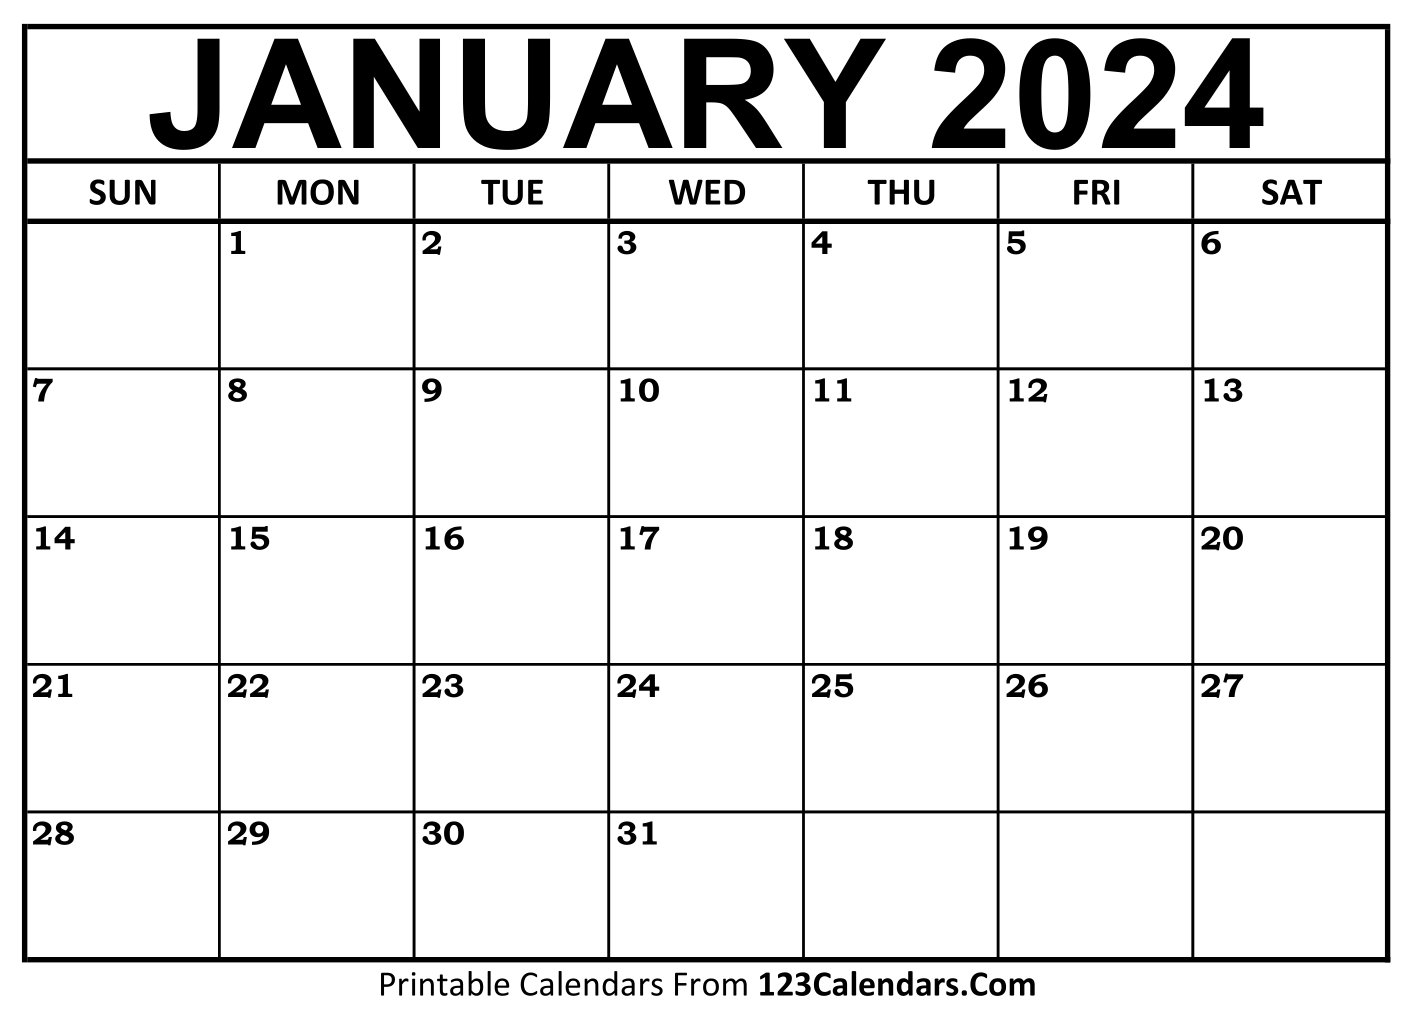 Printable January 2024 Calendar Templates - 123Calendars for January Calendar 2024 Printable Free